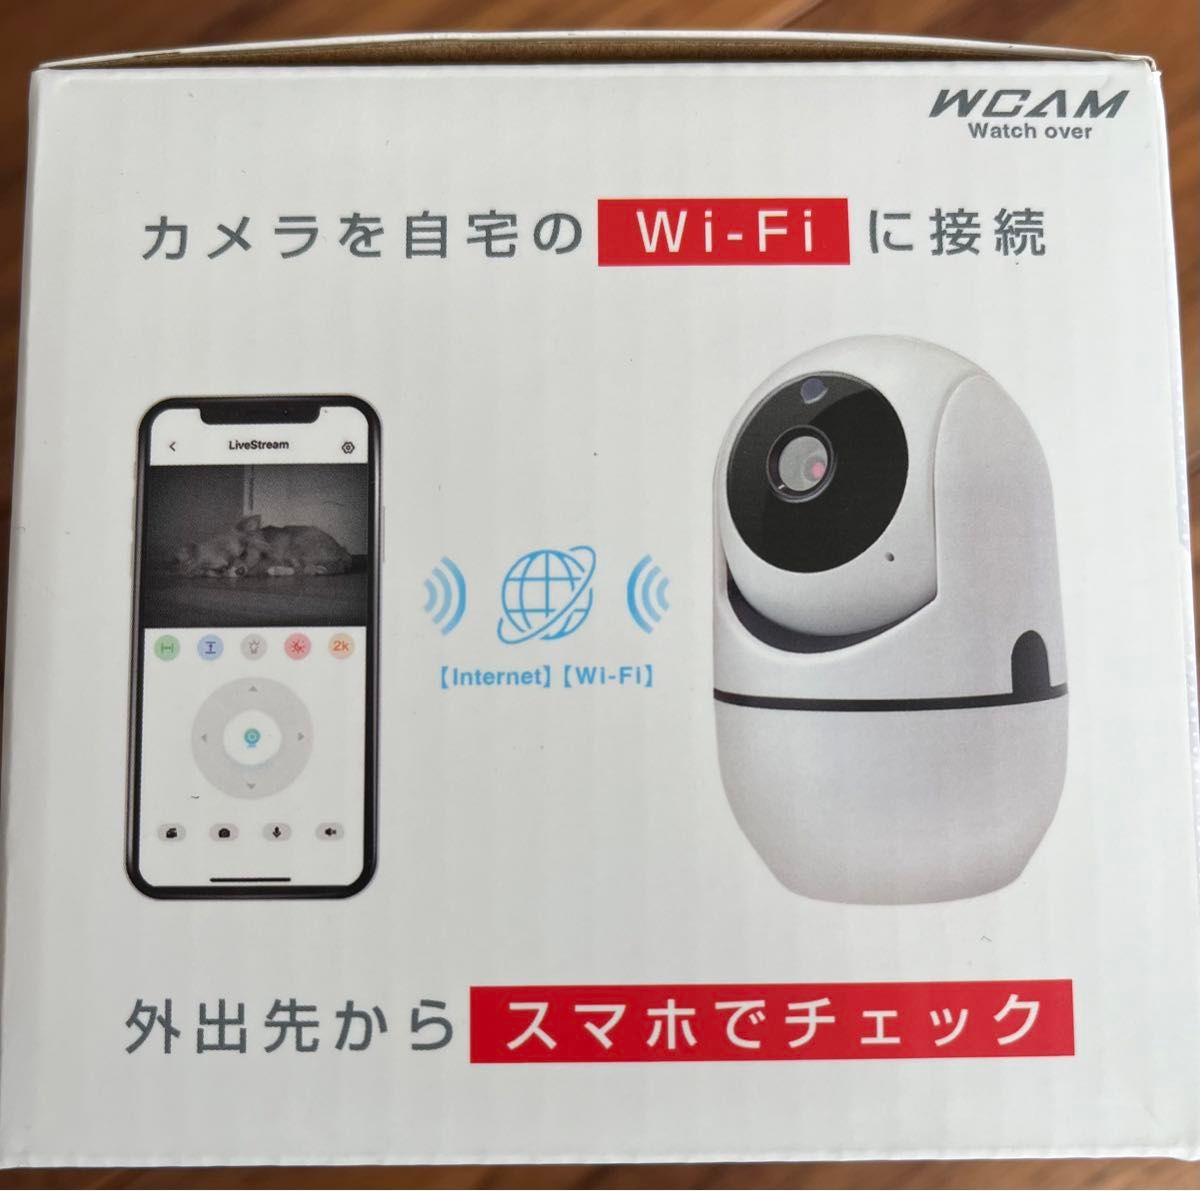 Wi-FiカメラII 監視カメラ Wi-Fi通信 通話確認 アプリ操作 ナイトビジョン USB電源 防犯 防犯カメラ 見守り